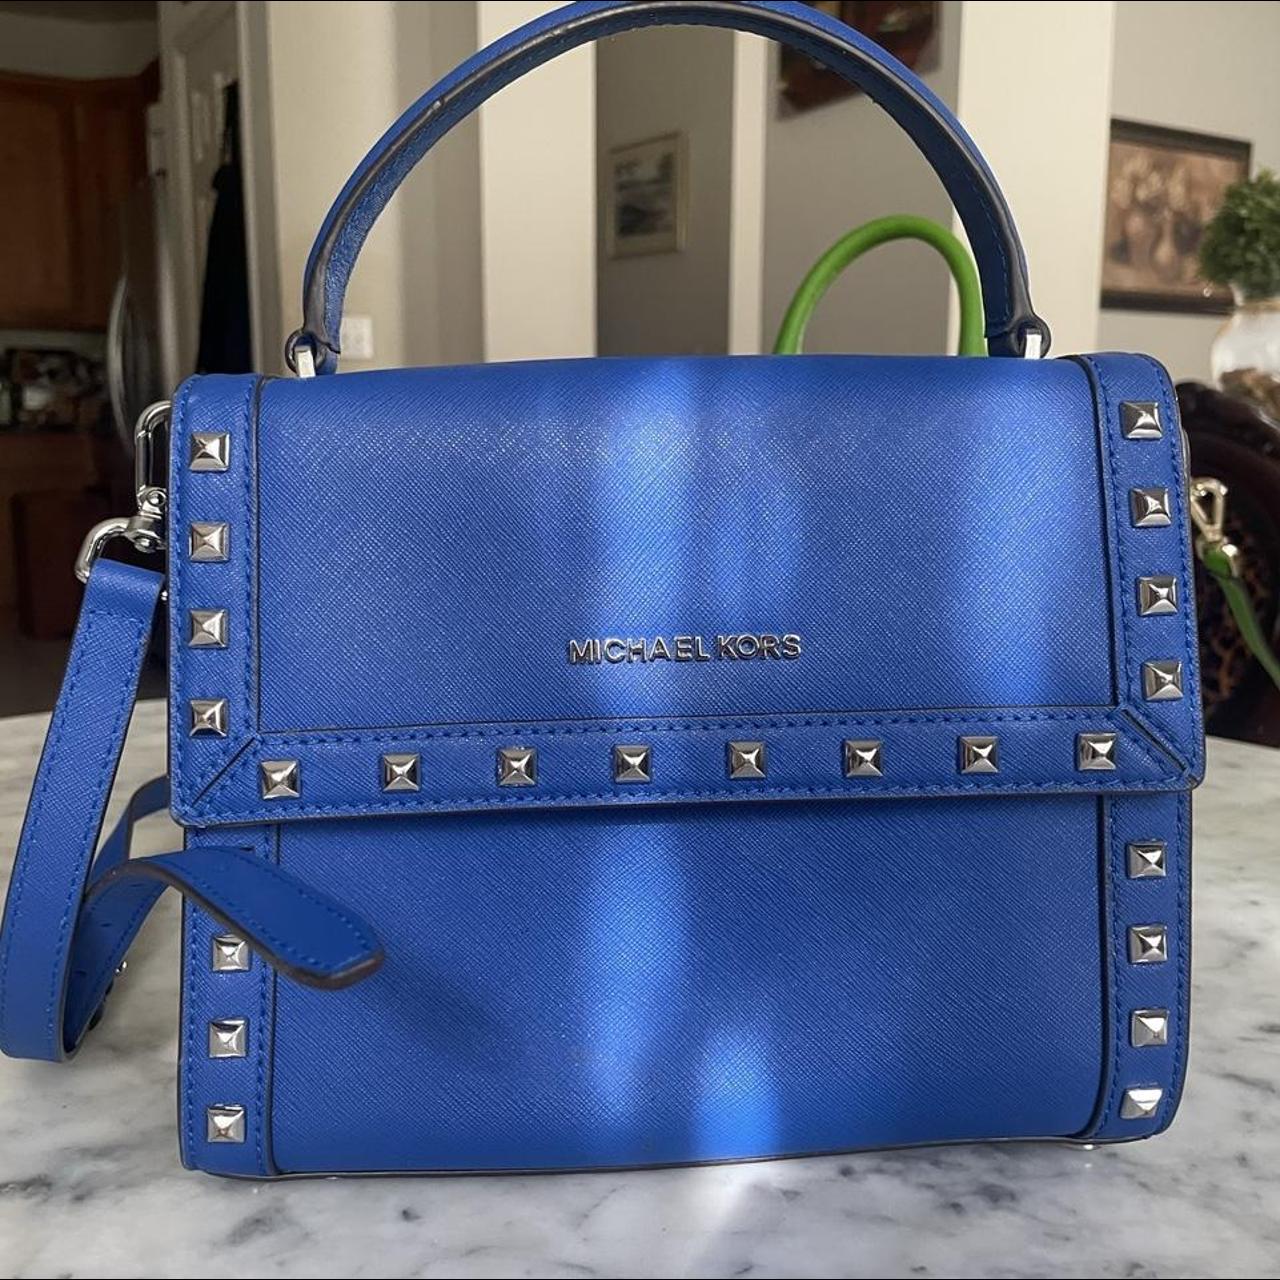 royal blue michael kors purse